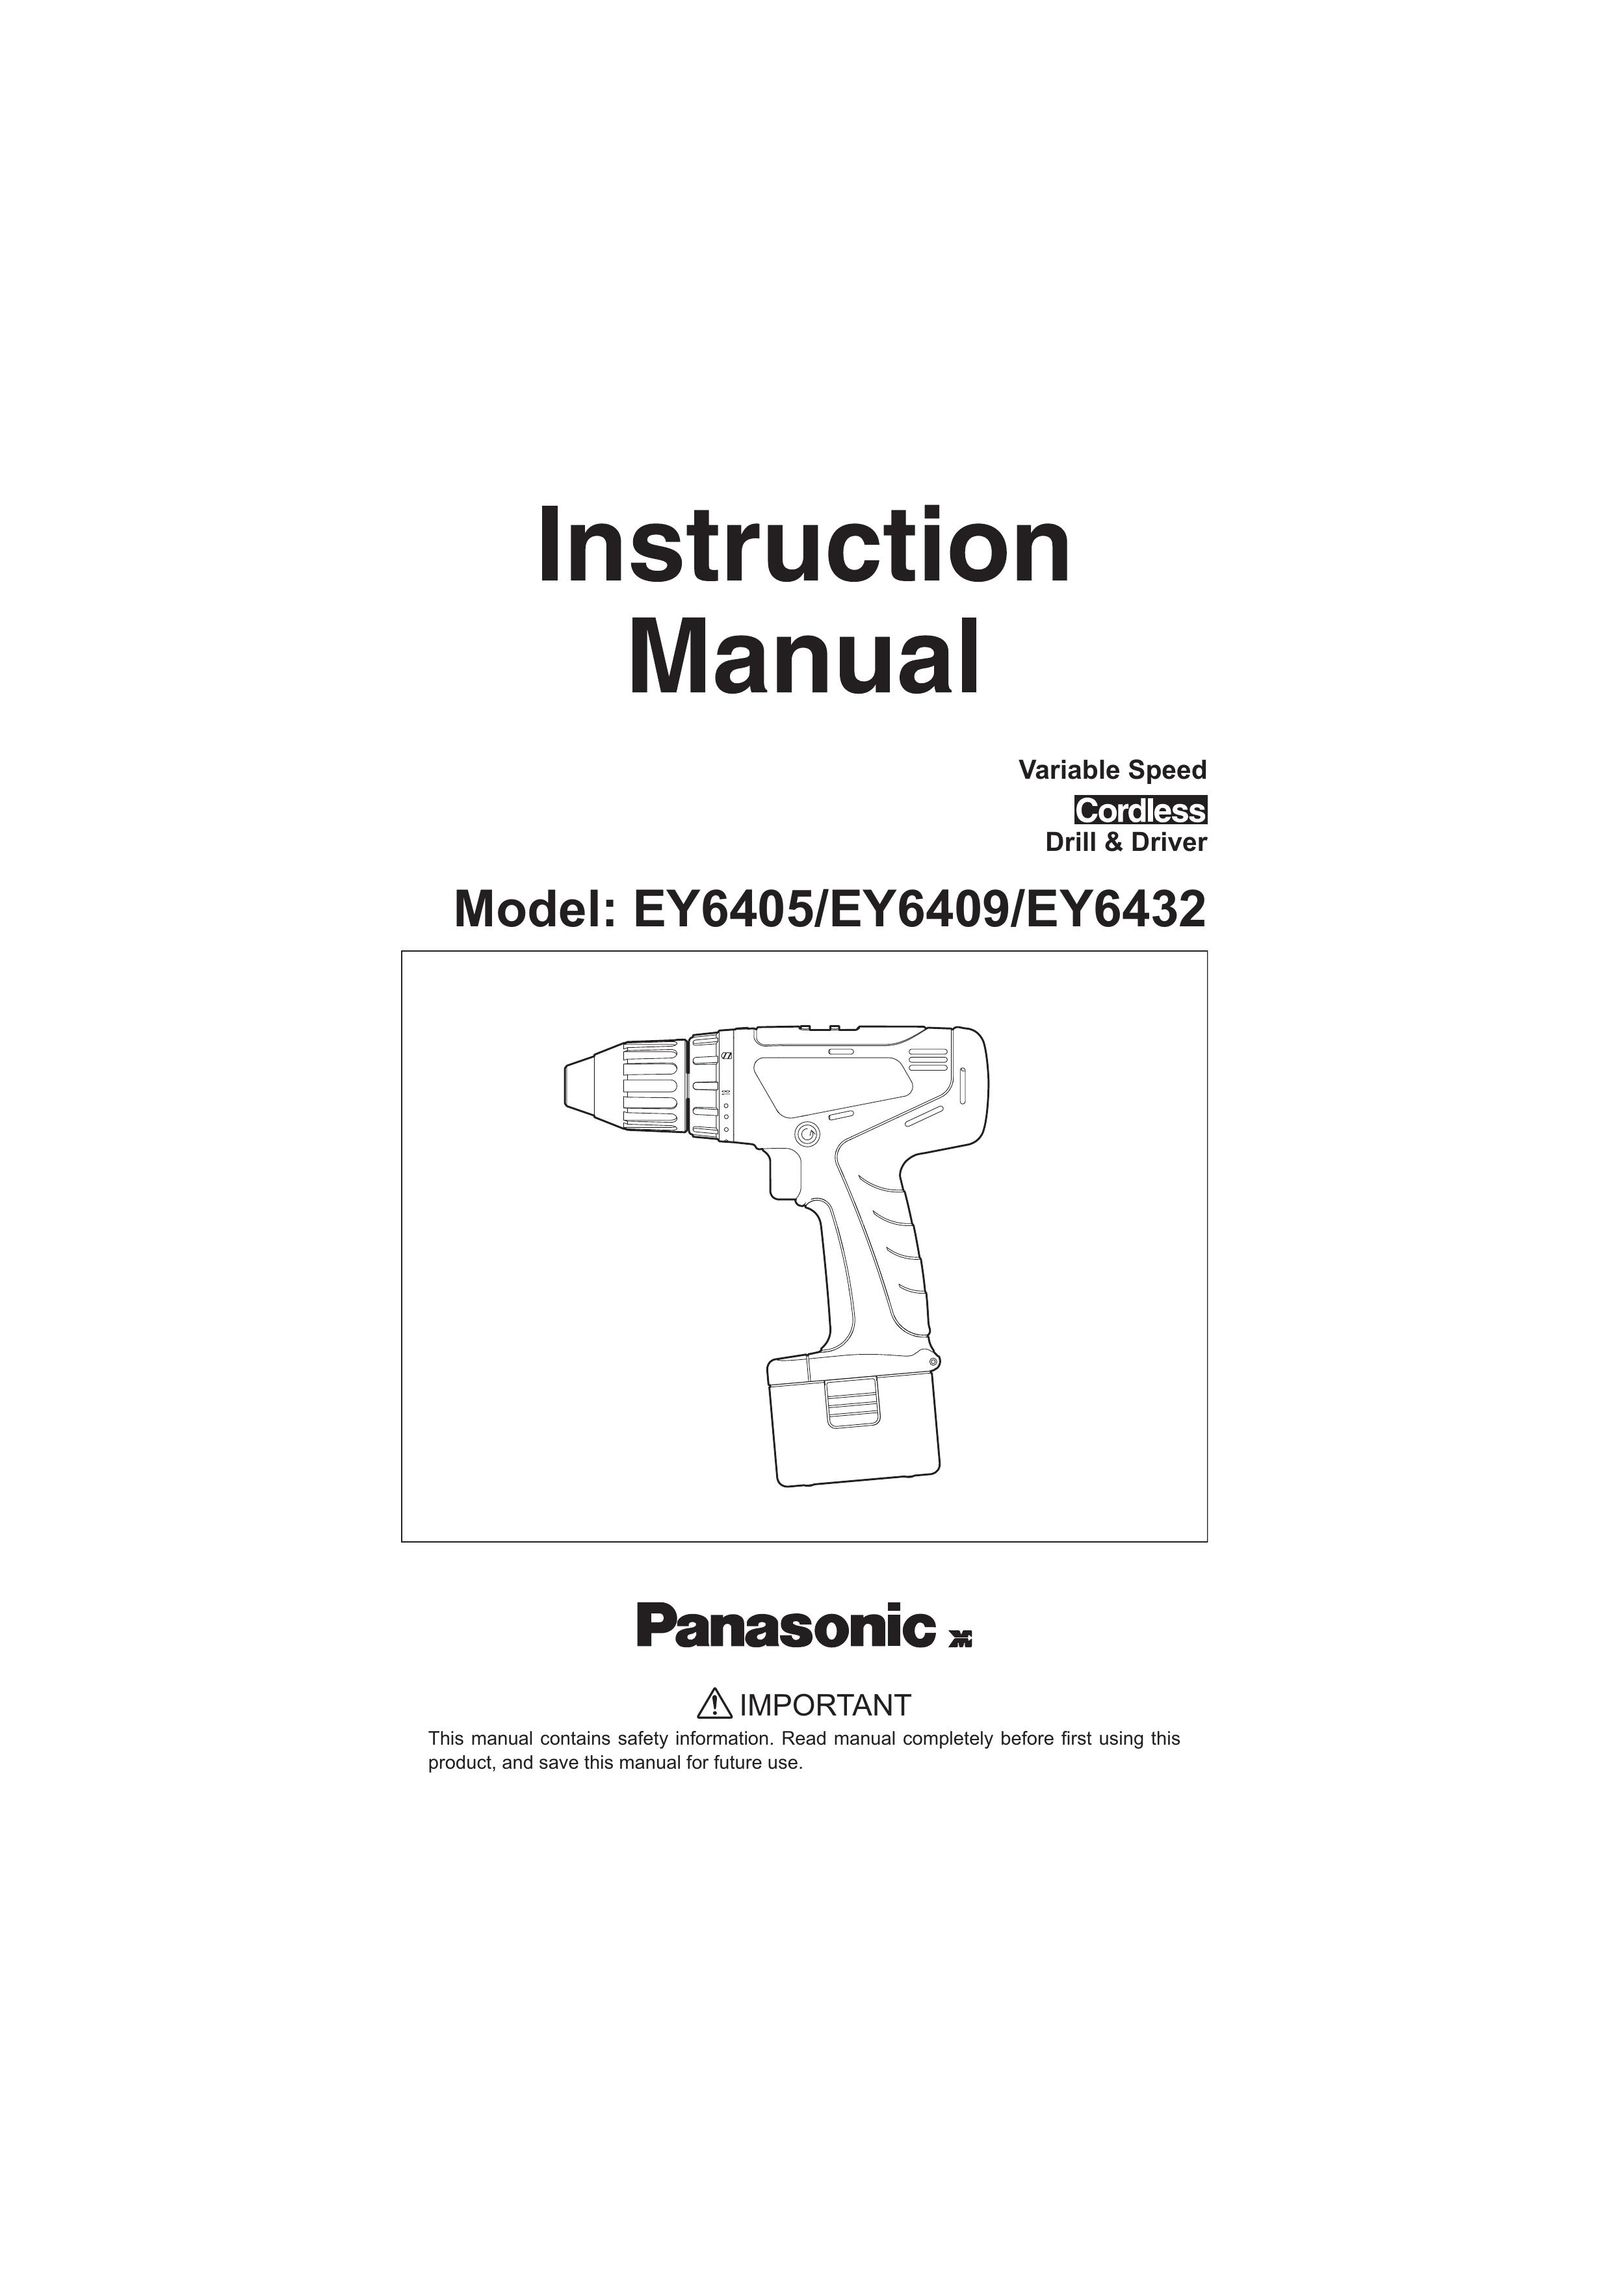 Panasonic EY6409 Cordless Drill User Manual